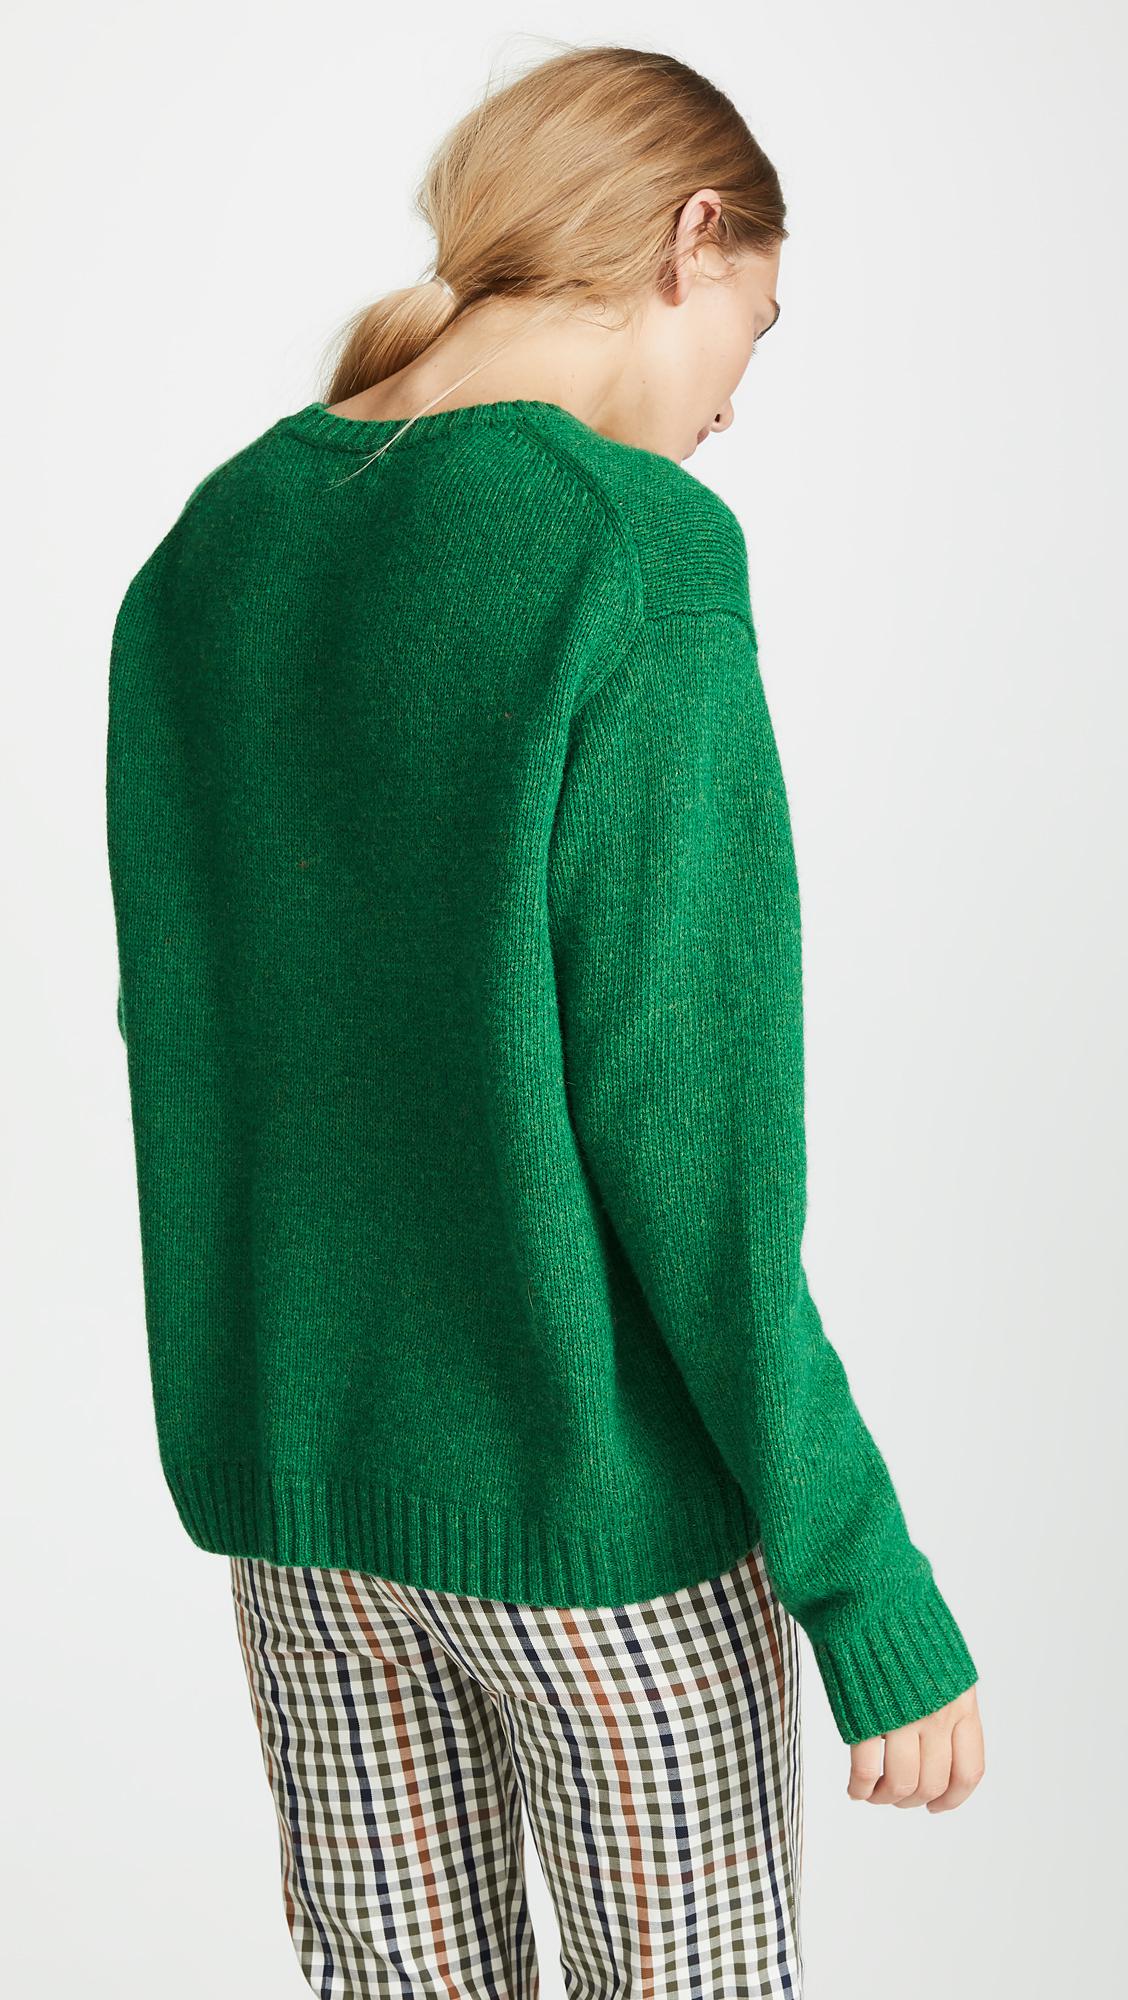 Acne Studios Samara Wool Sweater in Emerald Green (Green) - Lyst